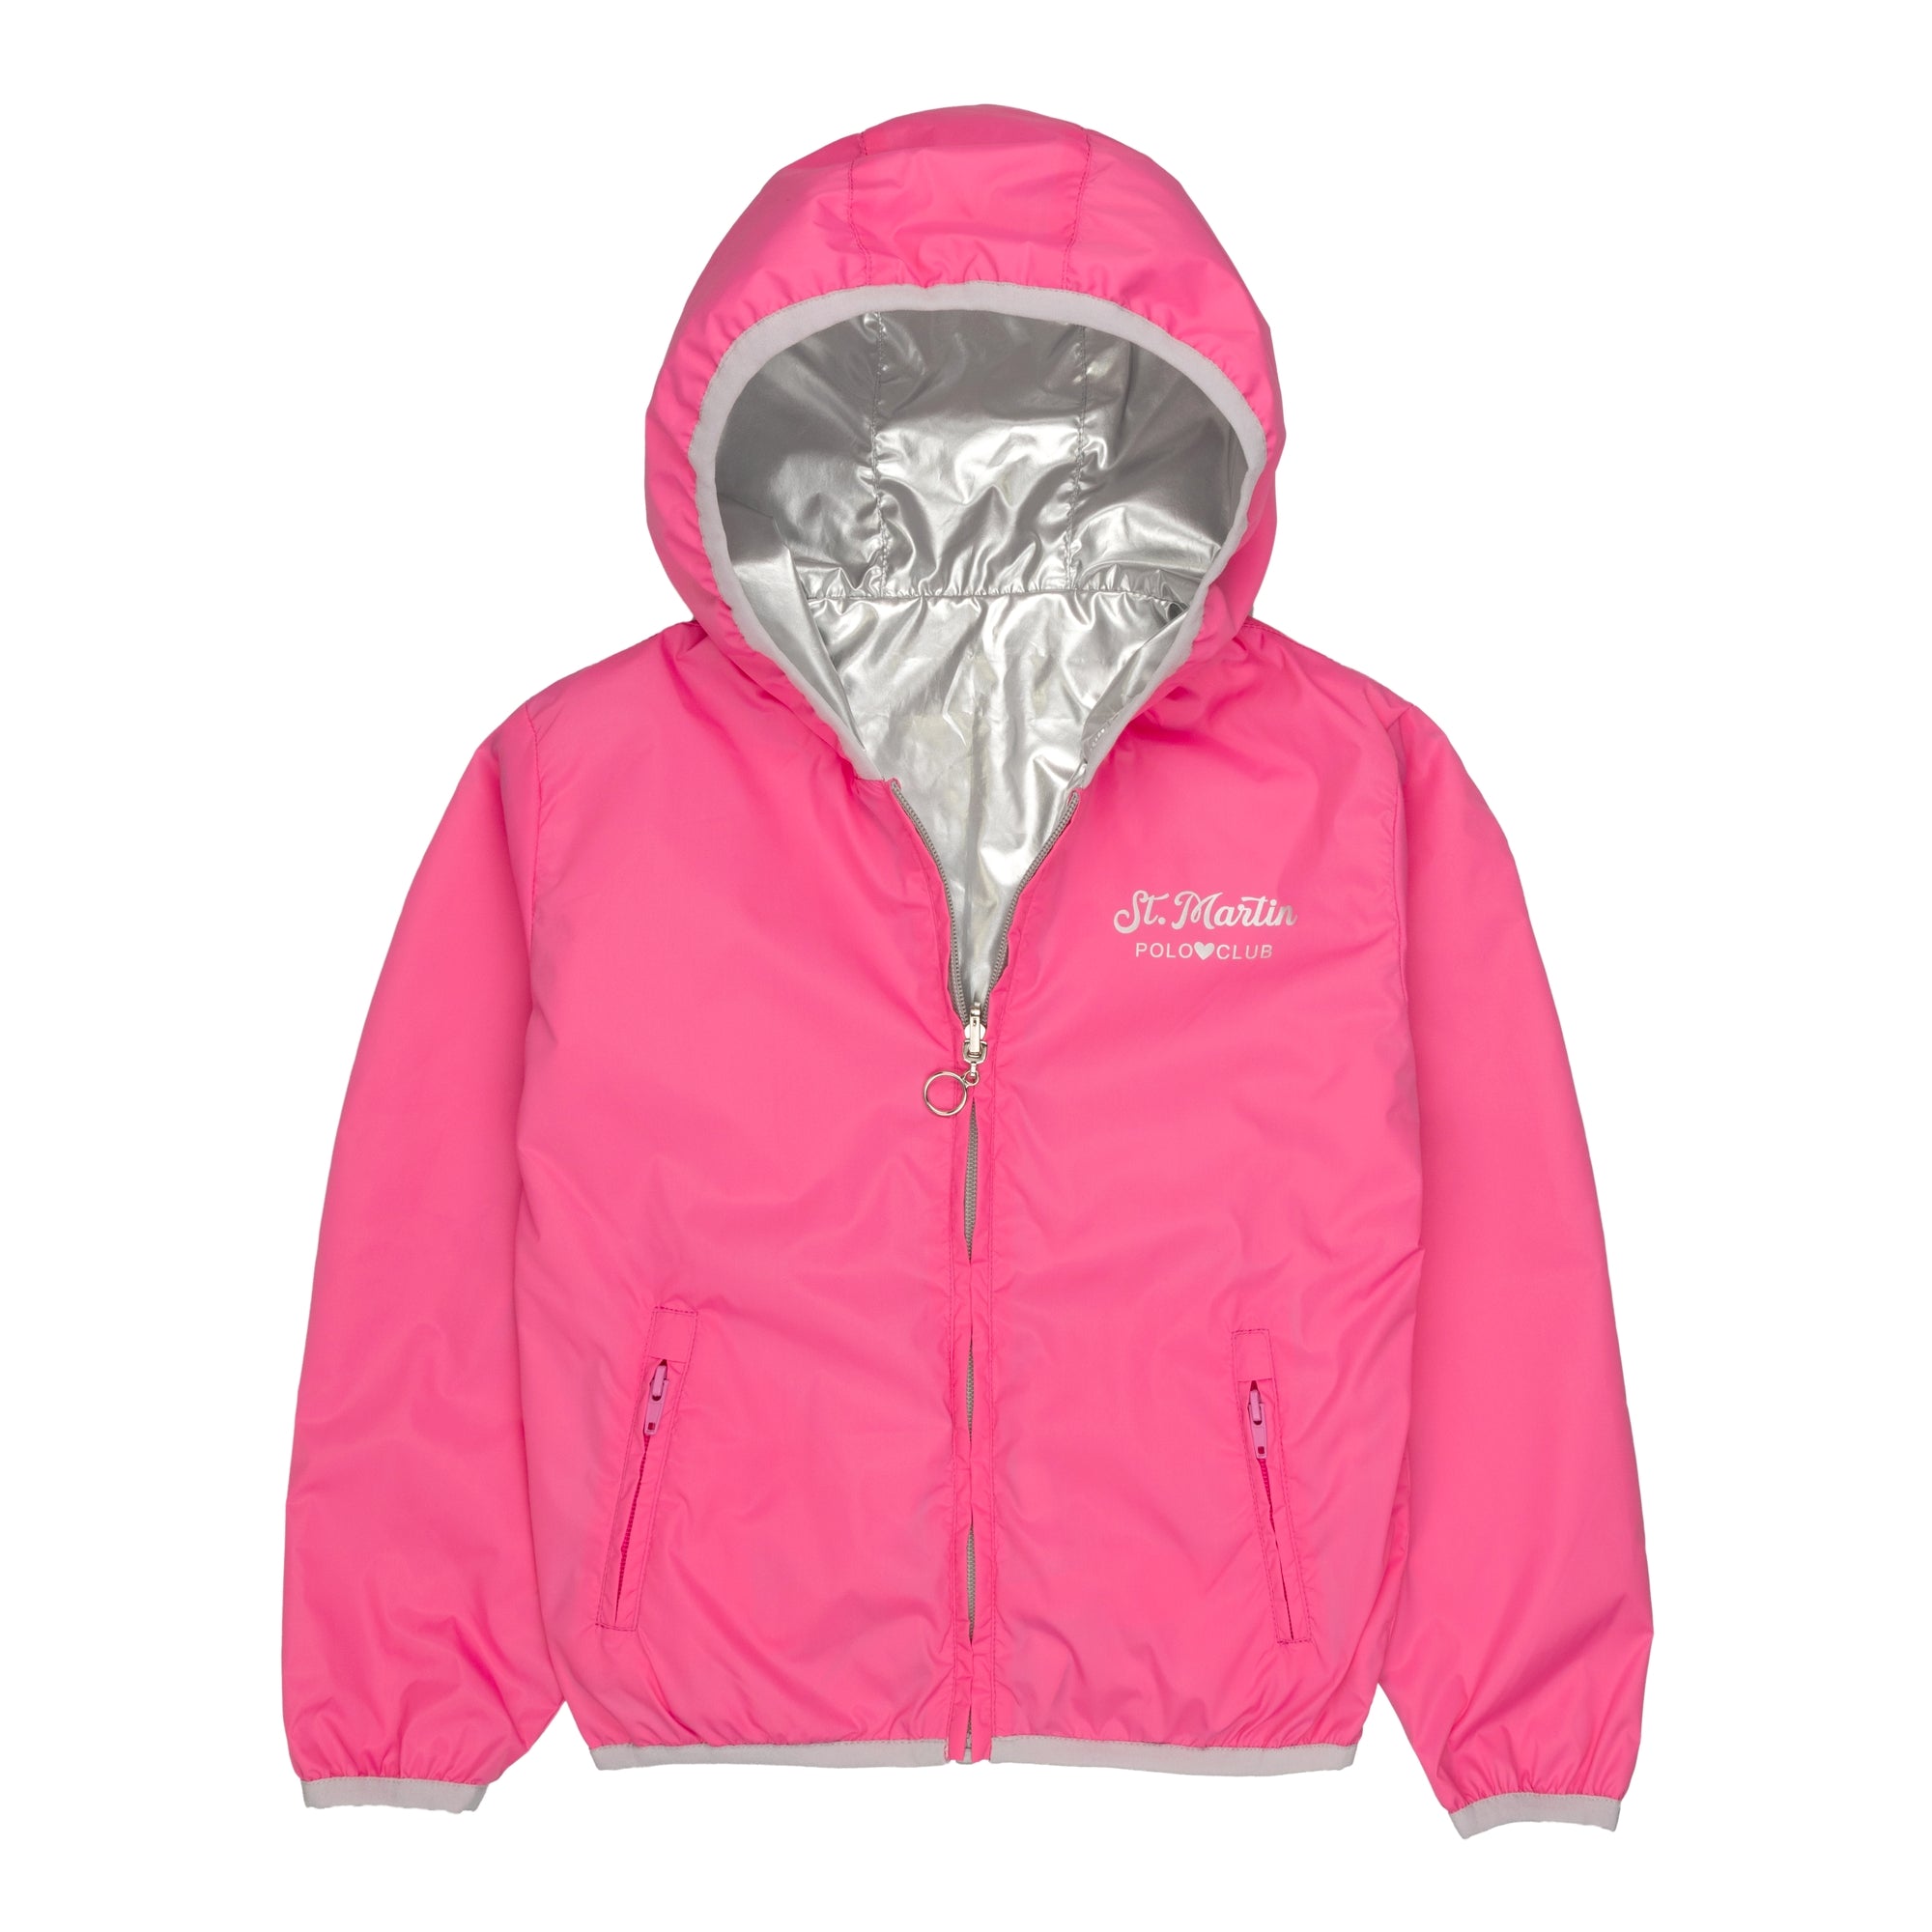 Double-sided windproof jacket